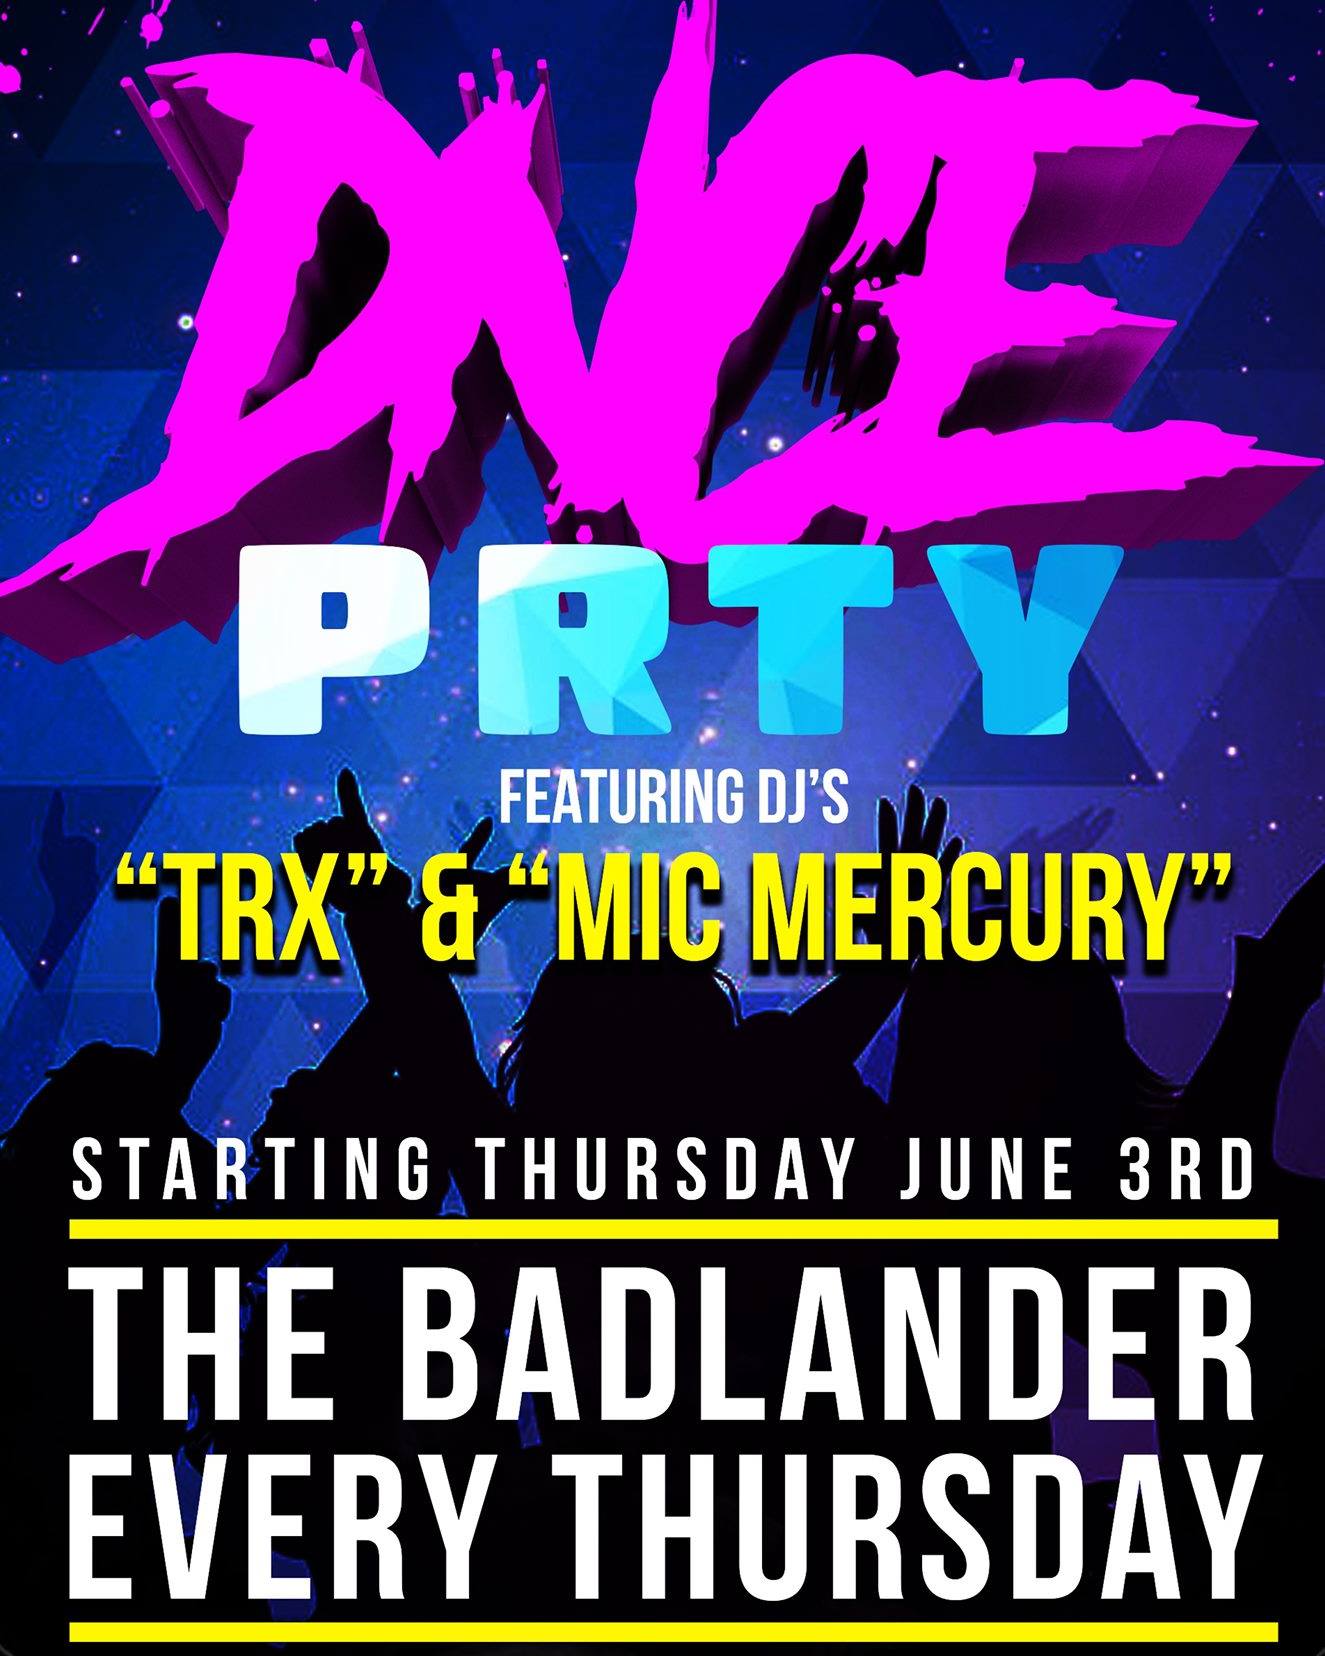 Dancy Party at Badlander on Thursday